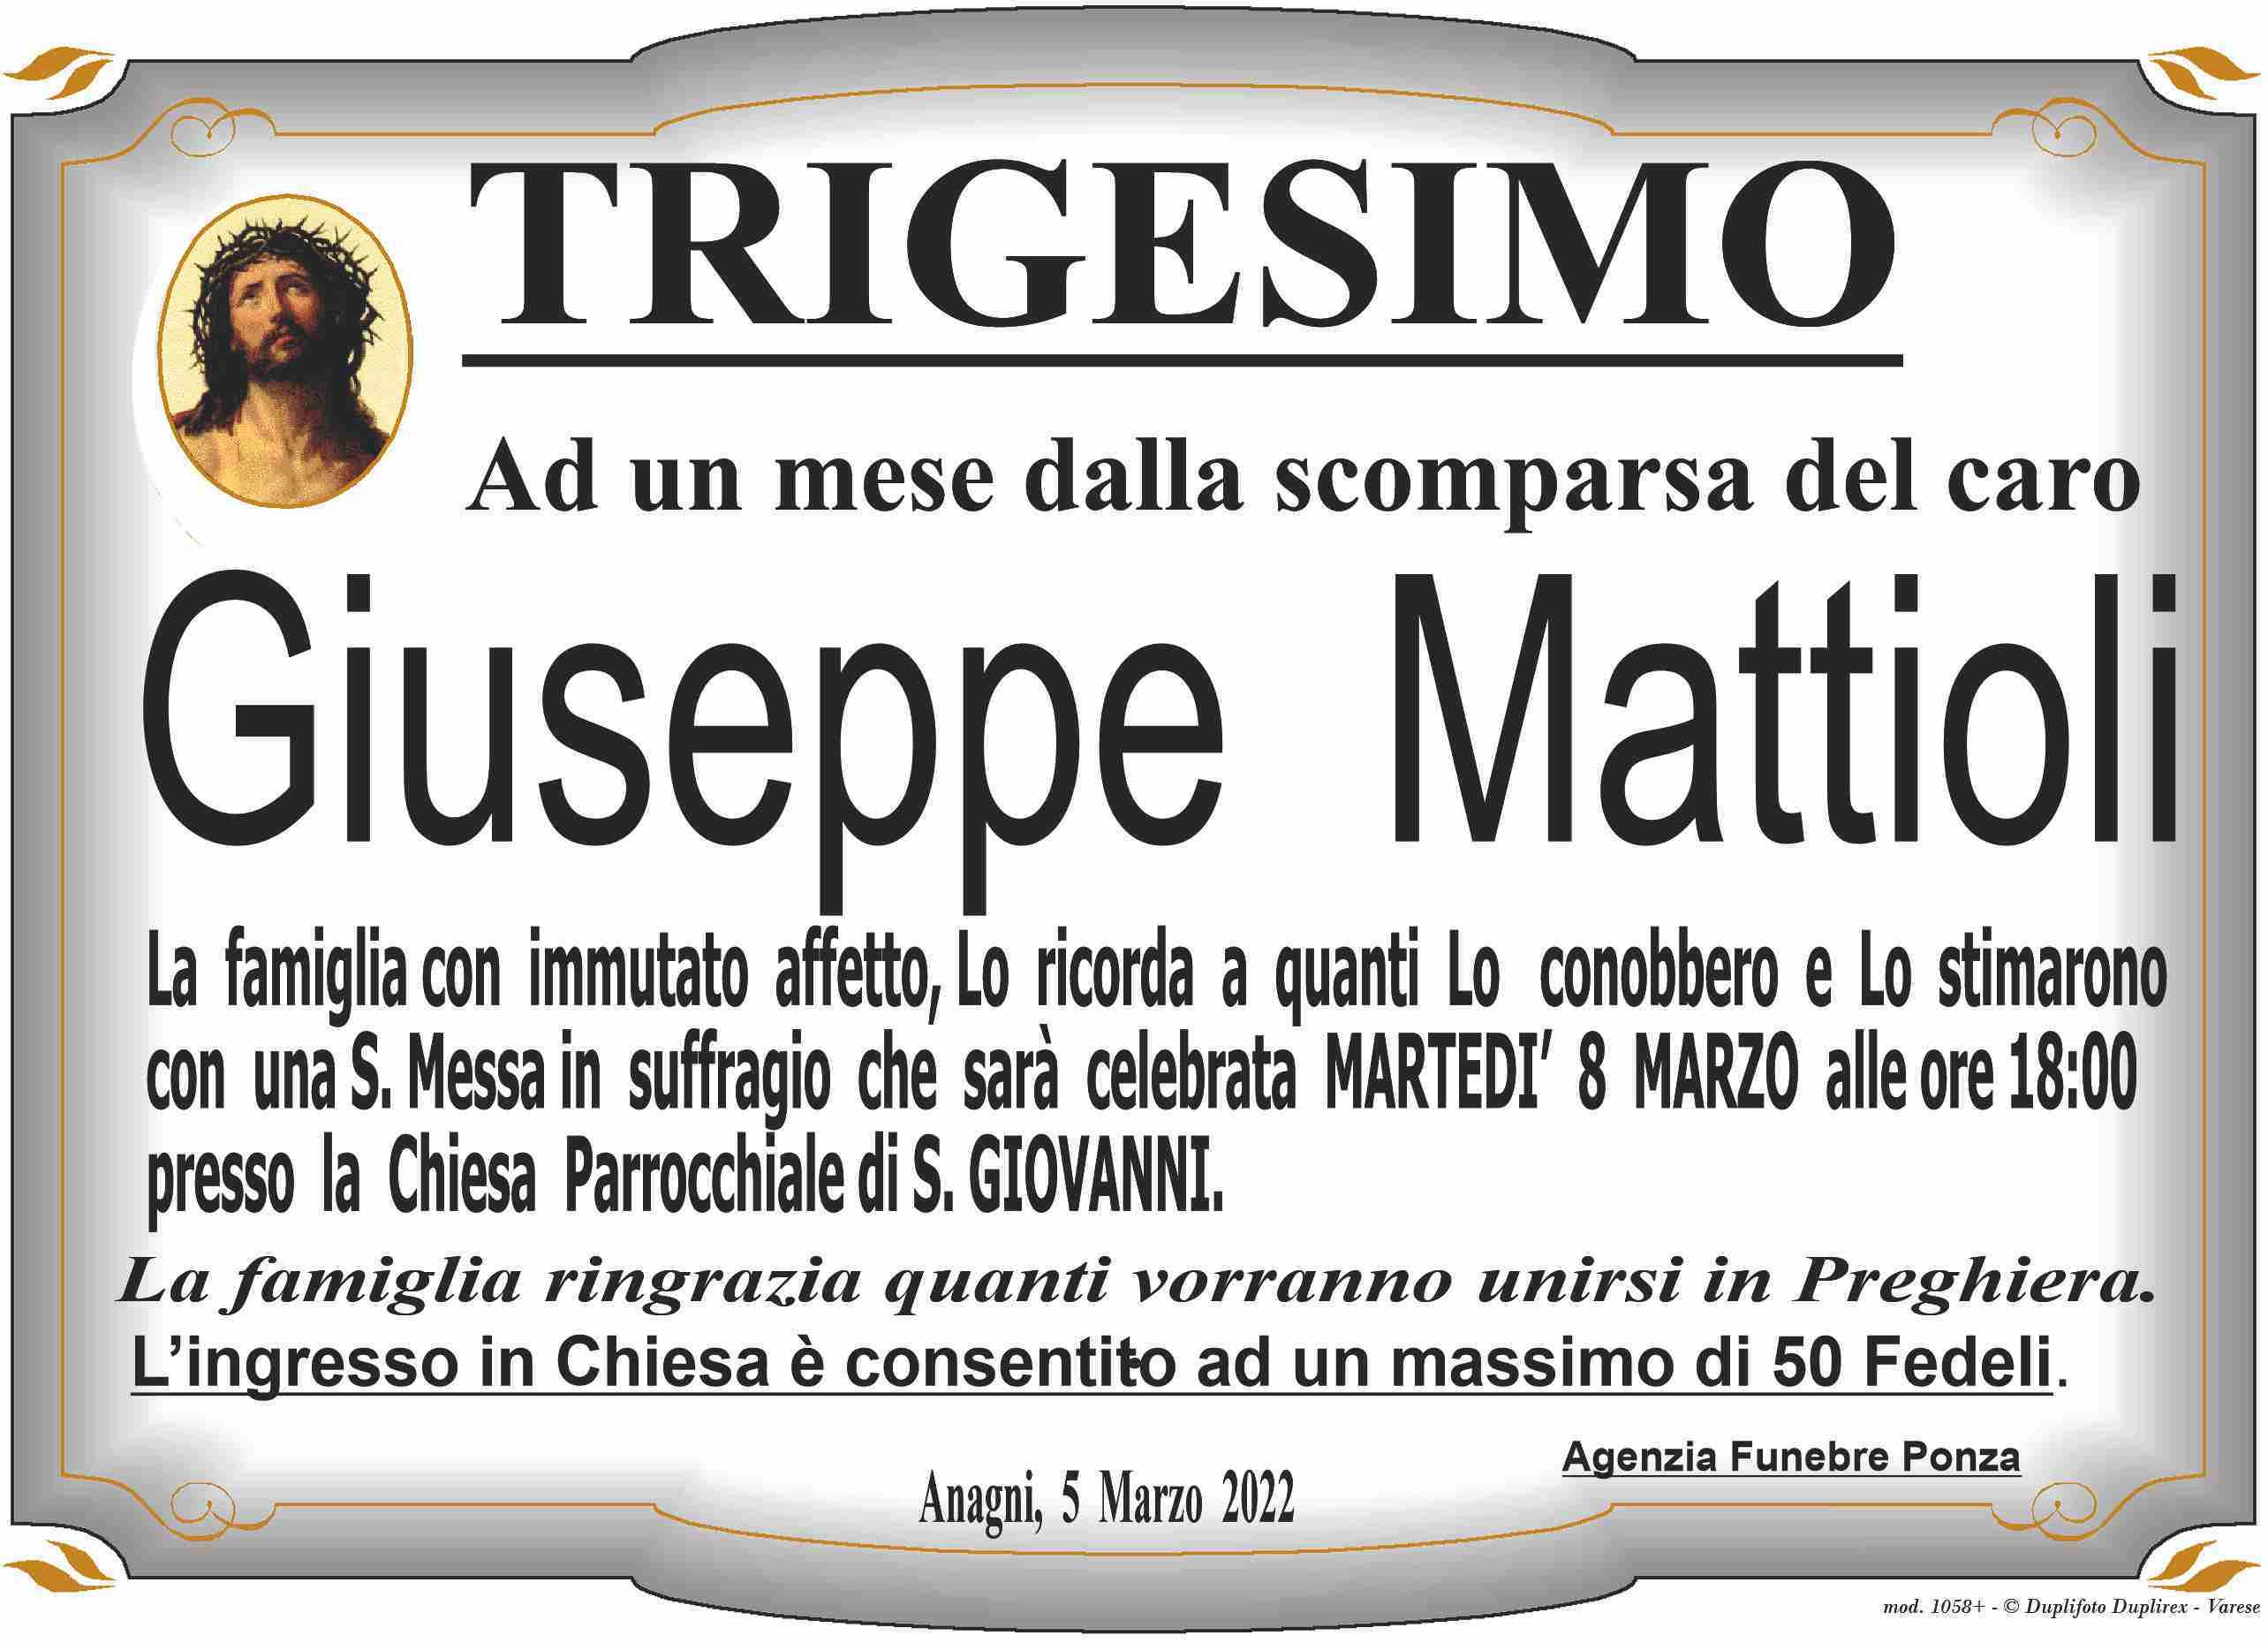 Giuseppe Mattioli